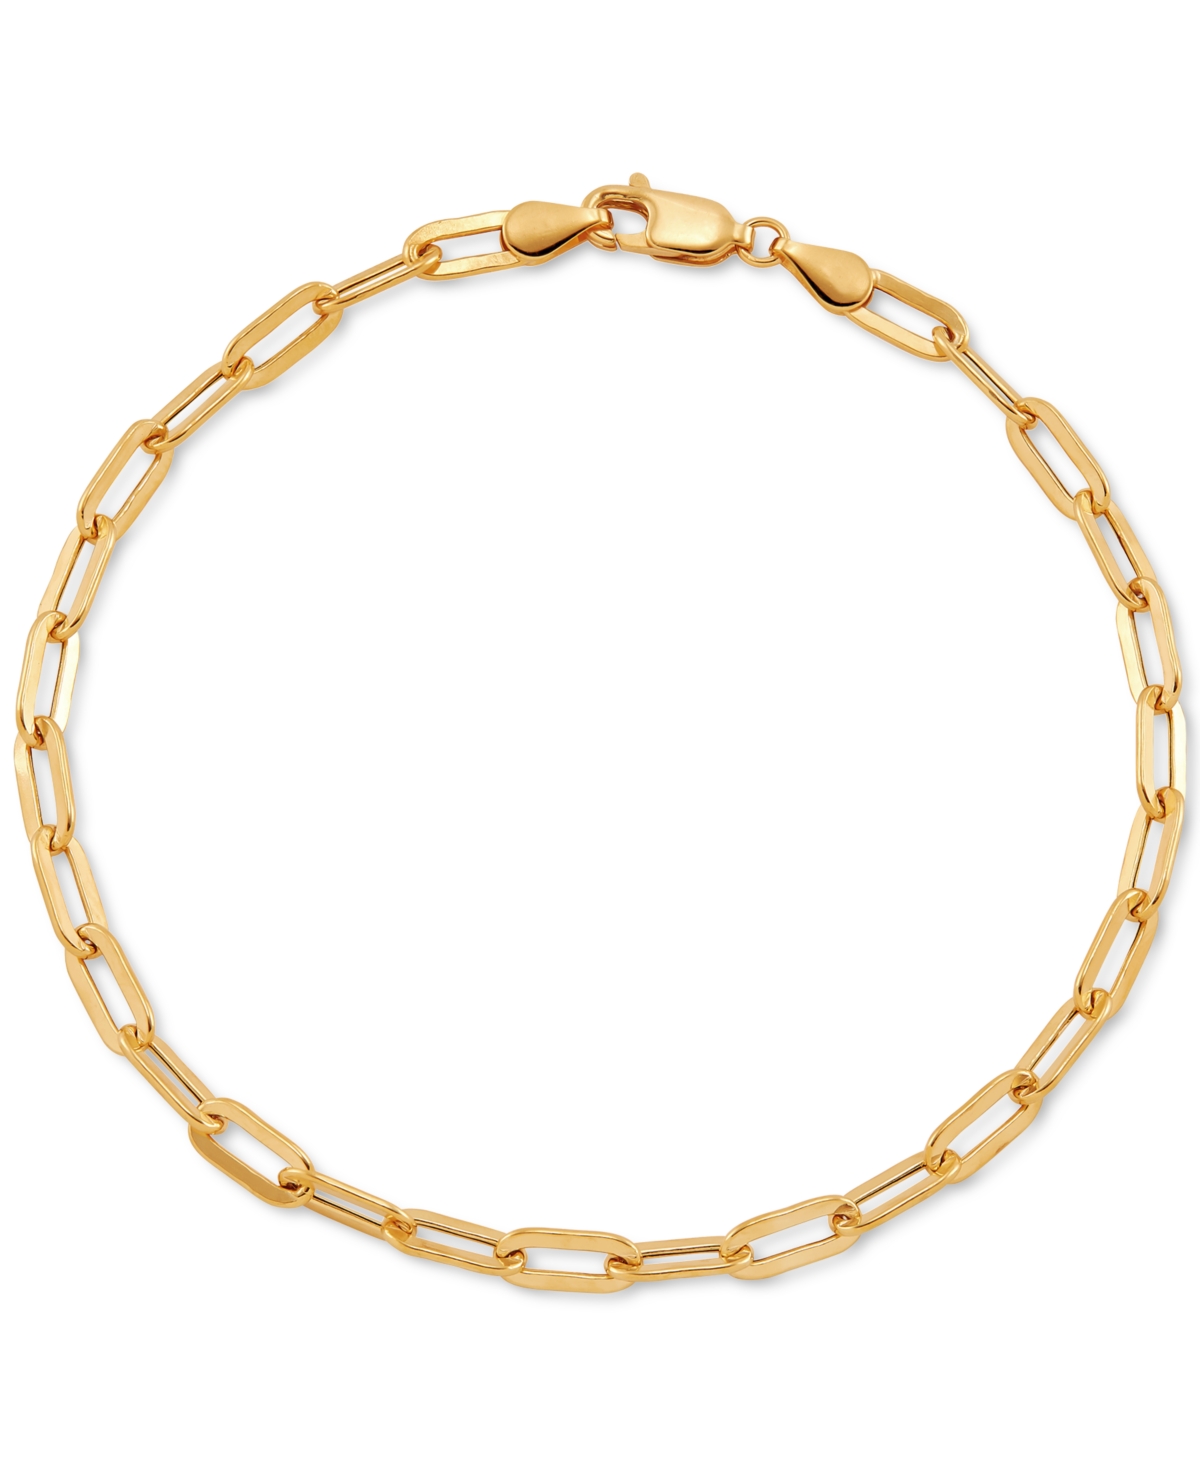 Paperclip Link Chain Bracelet in 10k Gold - Gold